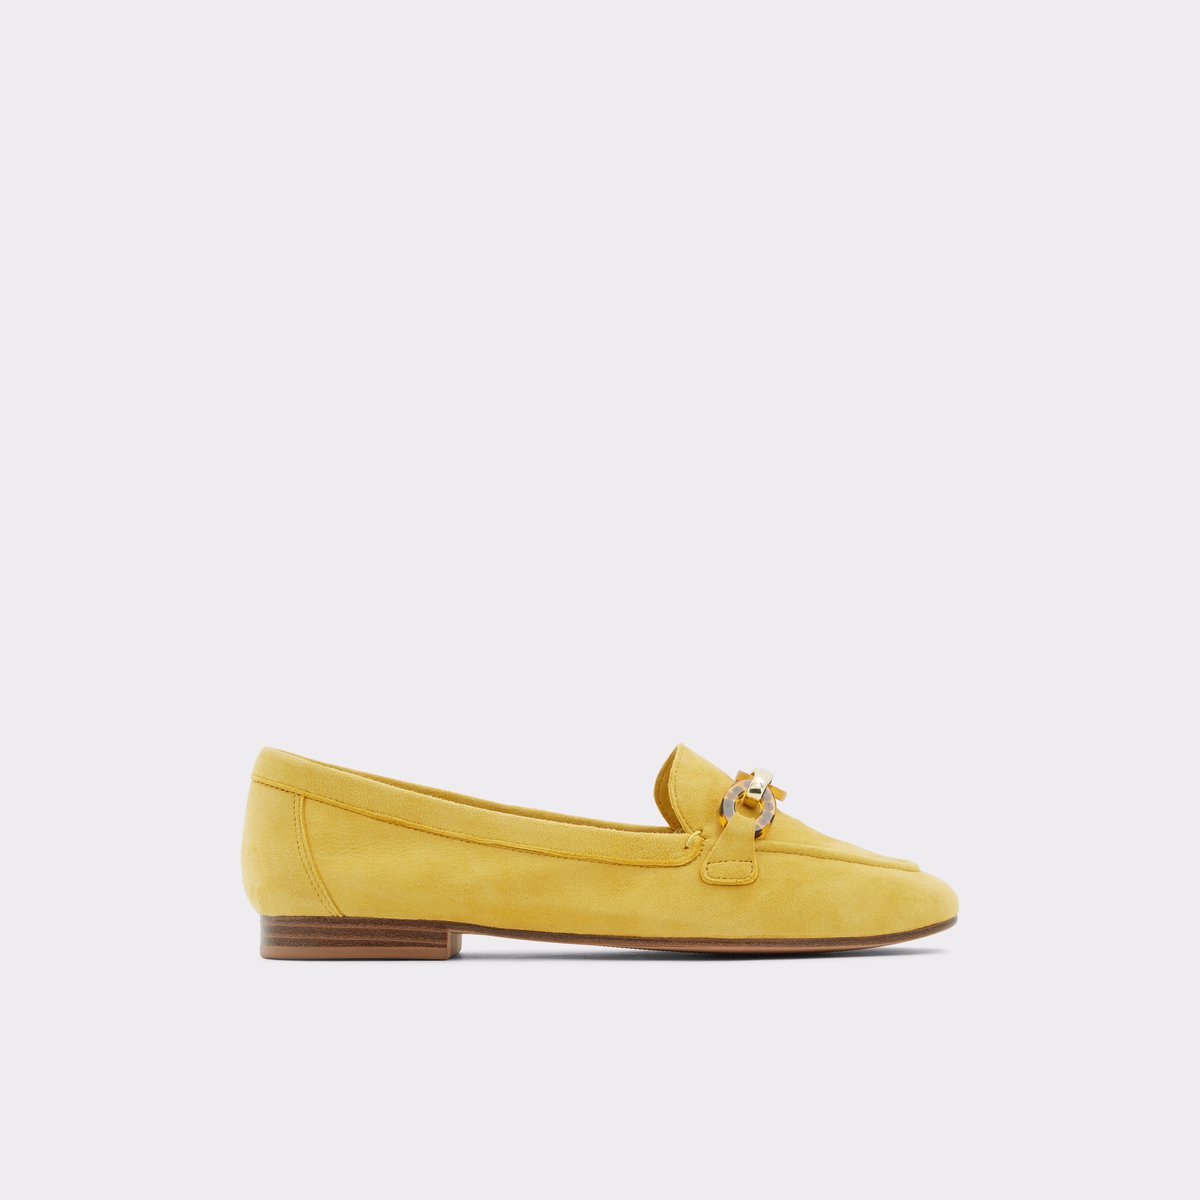 aldo yellow shoes